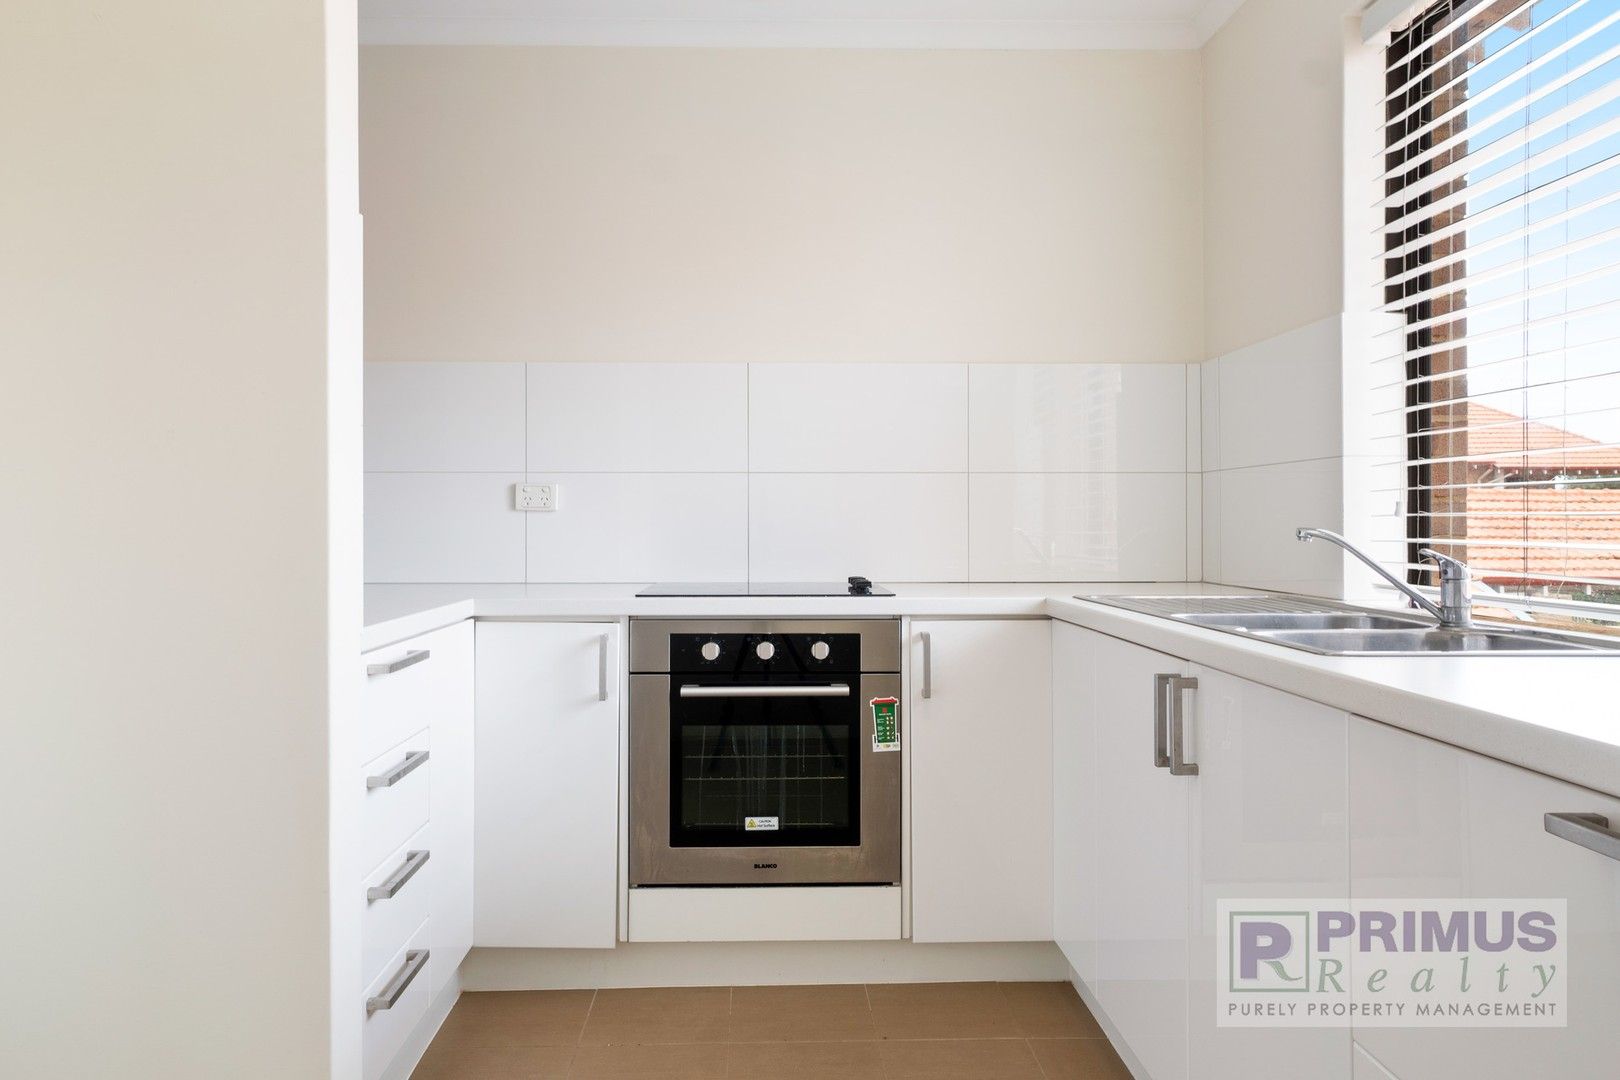 2 bedrooms Apartment / Unit / Flat in 36/11 Brentham Street LEEDERVILLE WA, 6007